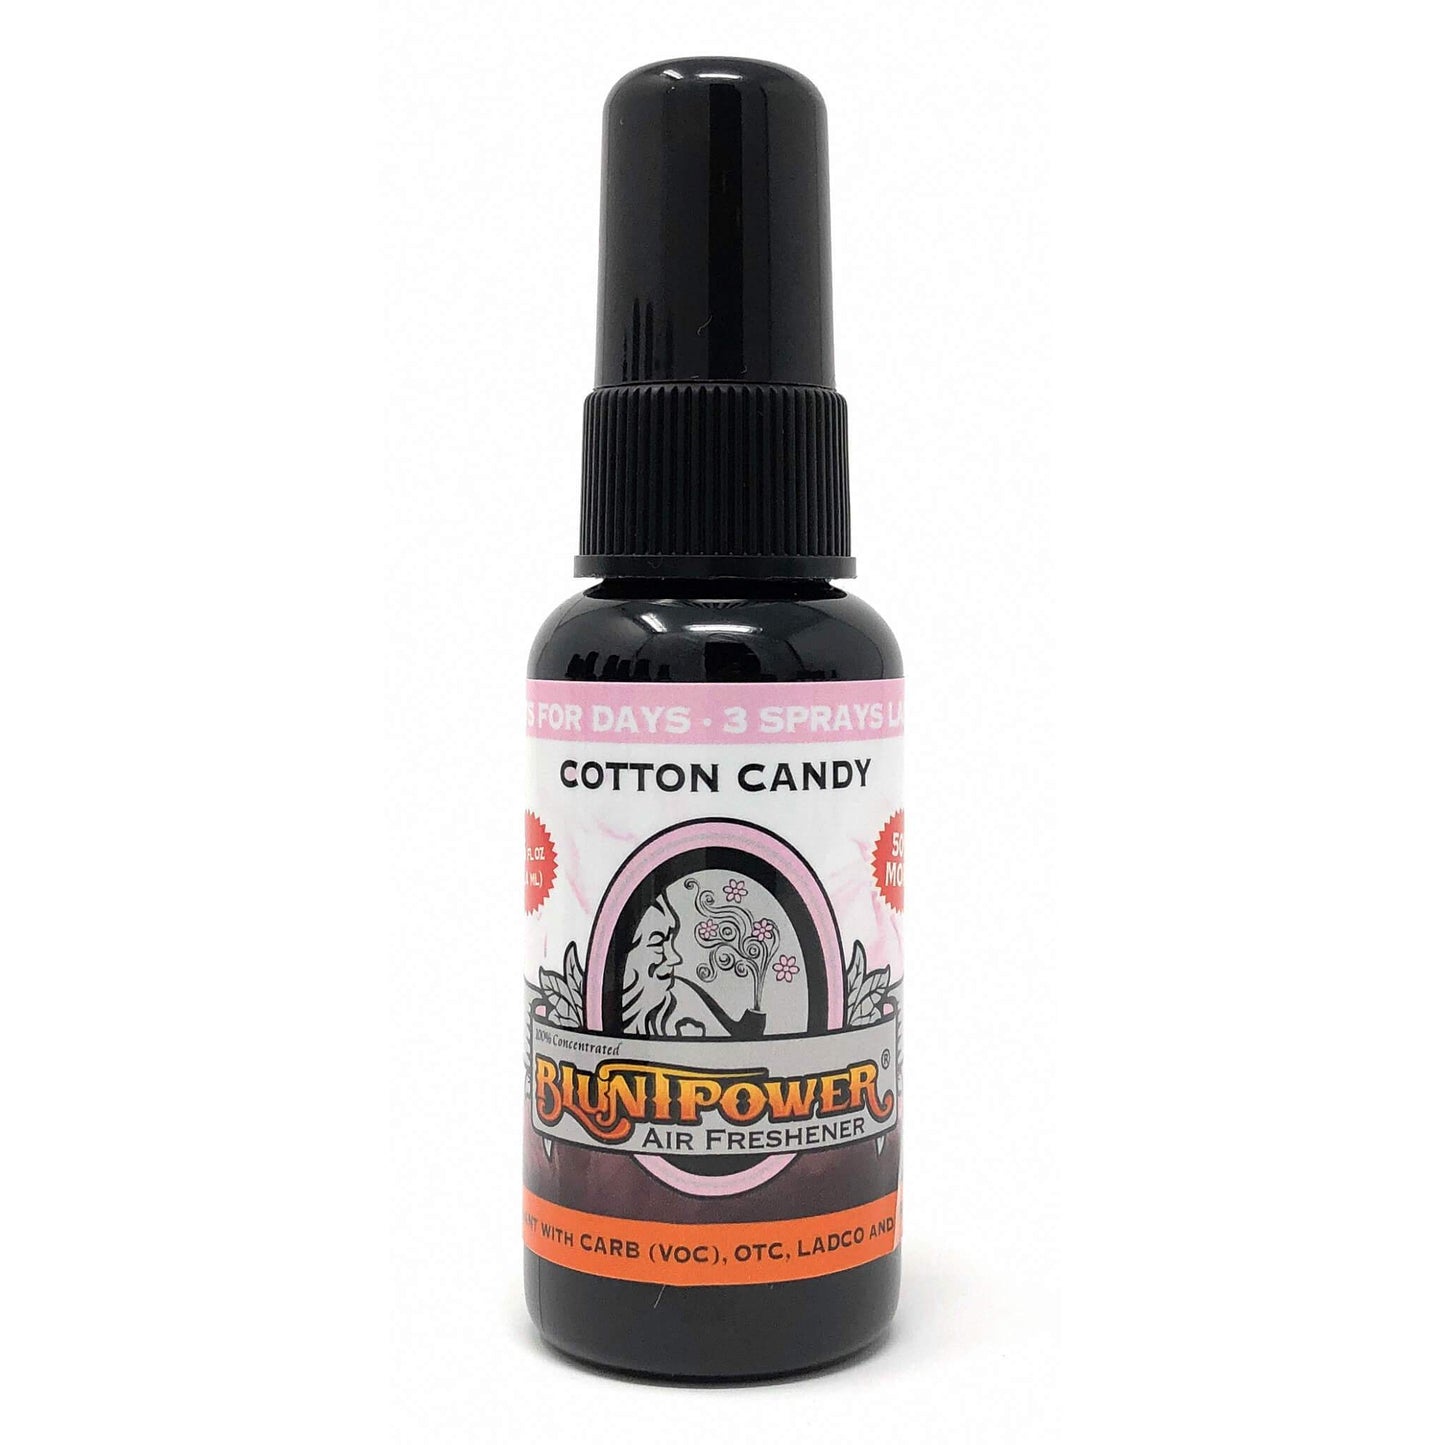 Cotton Candy Long-Lasting Spray Air Freshener